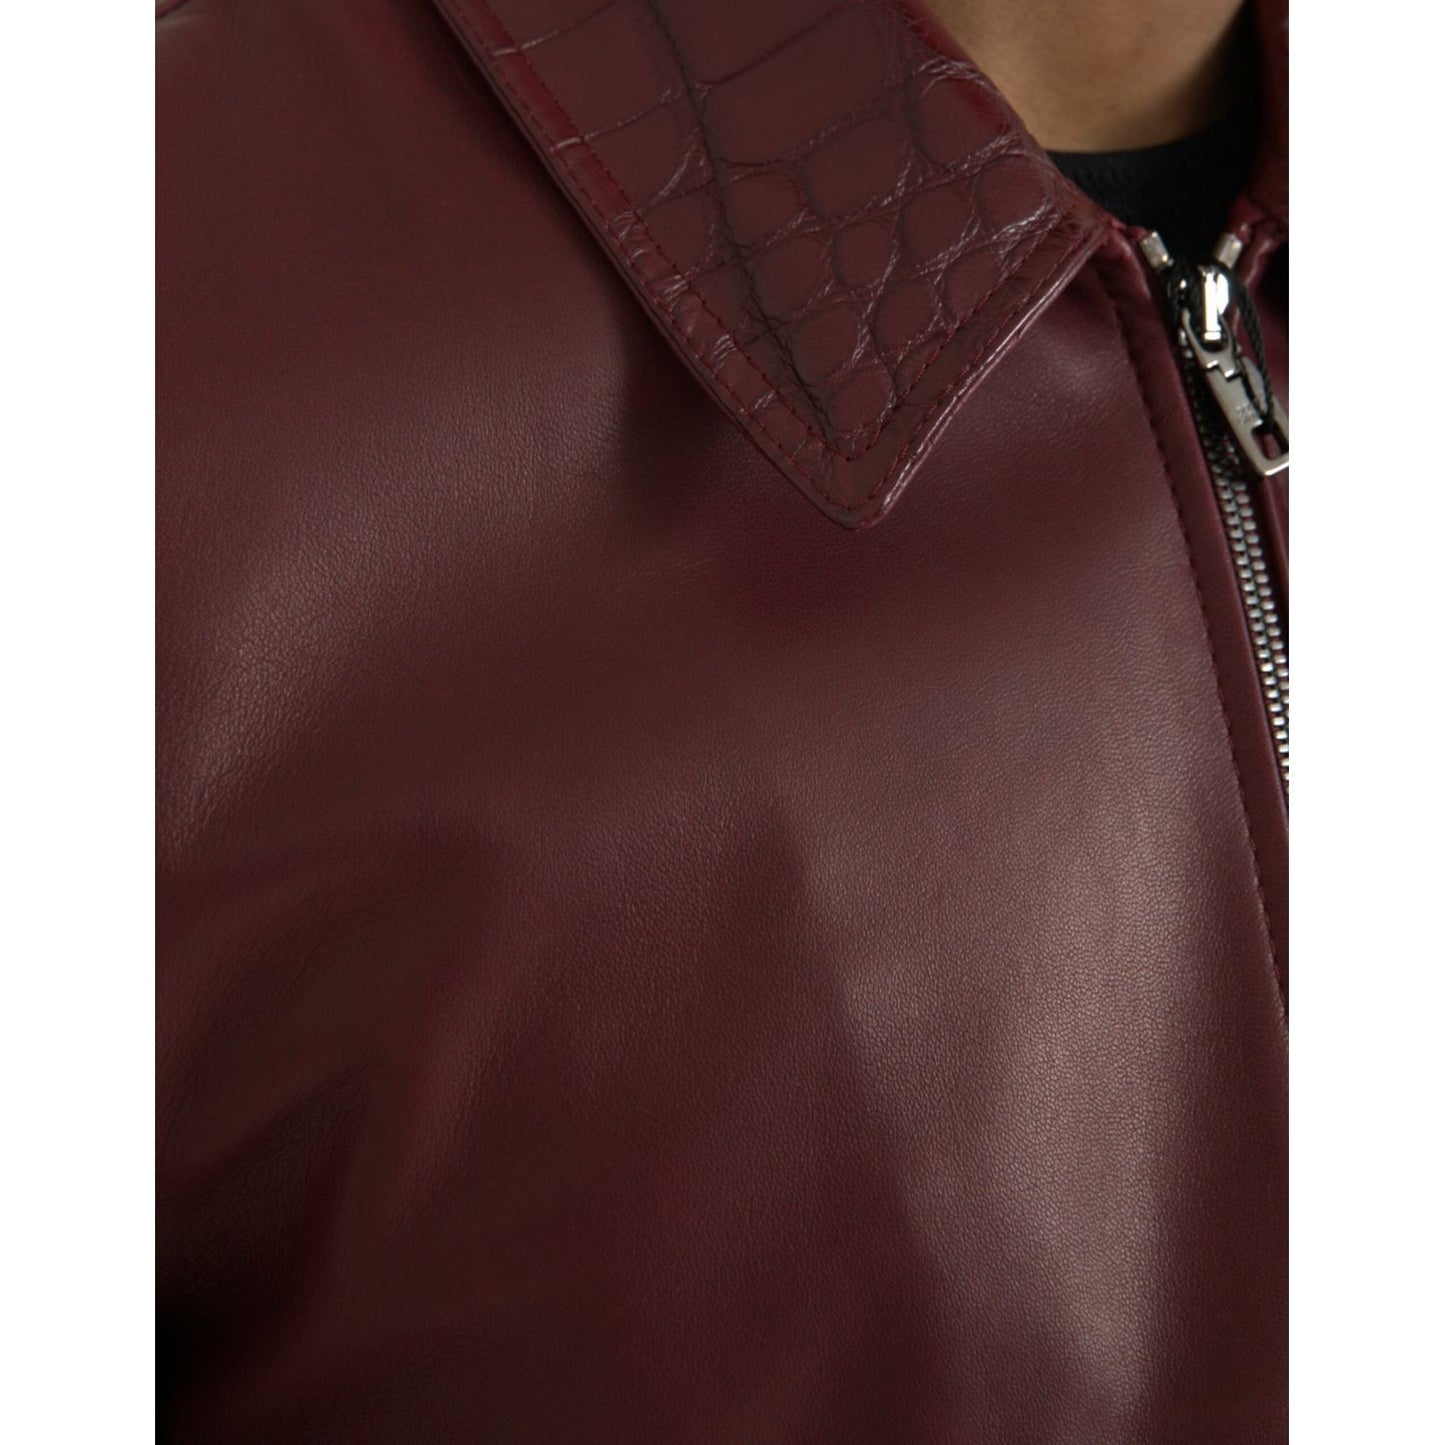 Dolce & Gabbana Maroon Exotic Leather Zip Biker Coat Jacket maroon-exotic-leather-zip-biker-coat-jacket